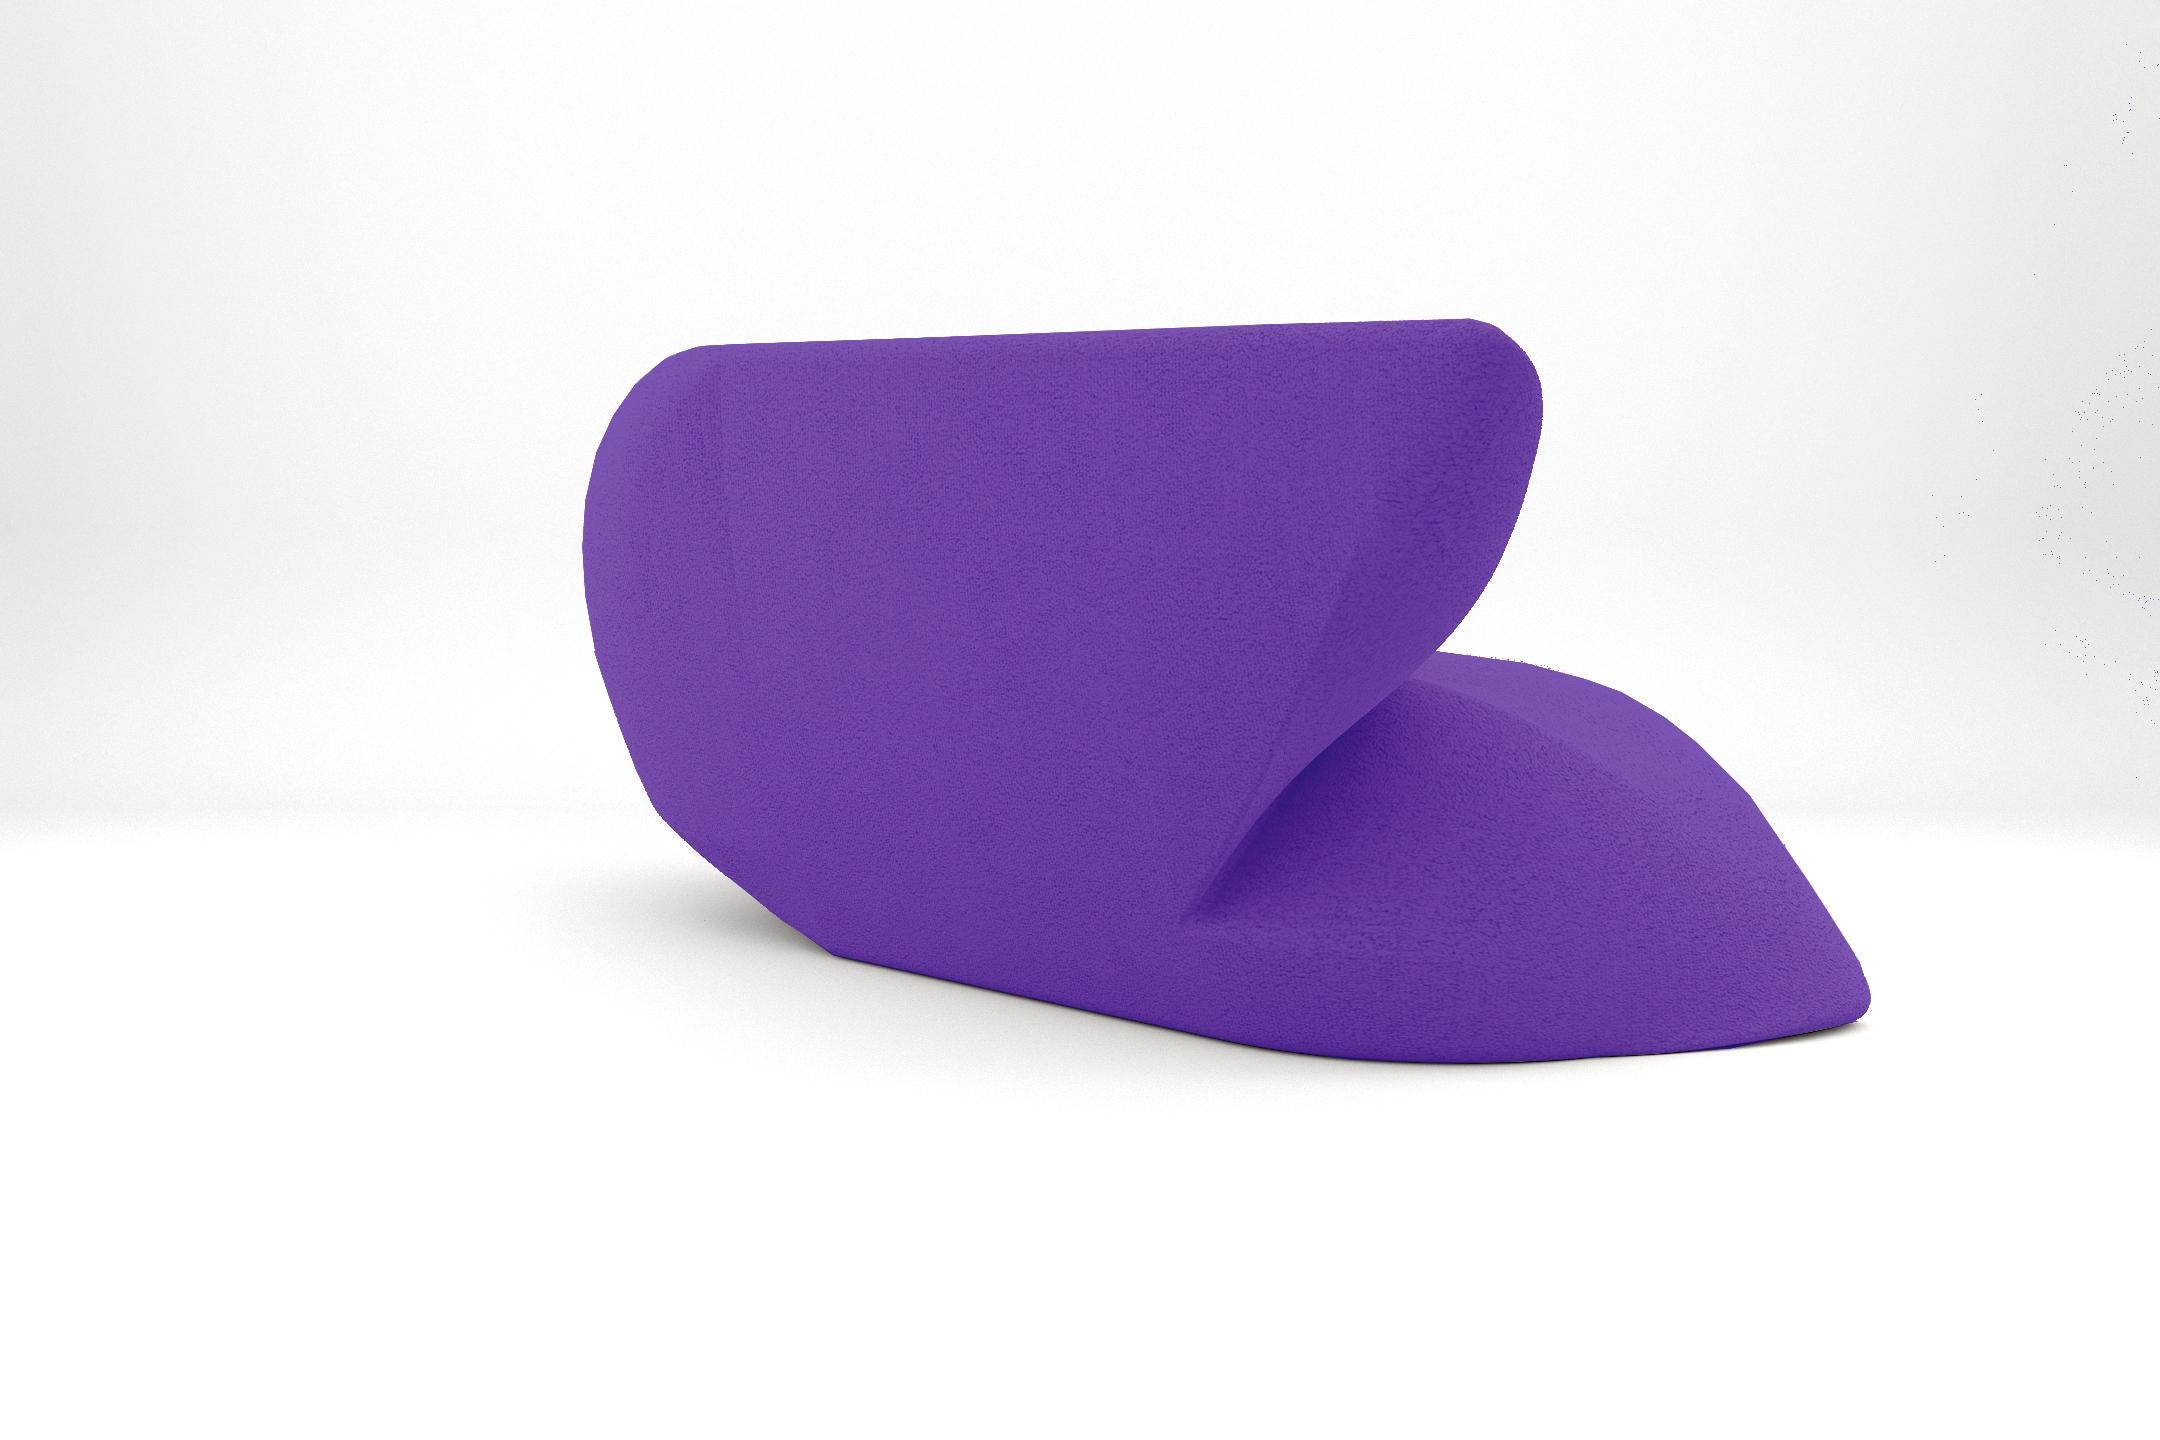 European Delta Sofa - Modern Ultra Violet Upholstered Two Seat Sofa For Sale